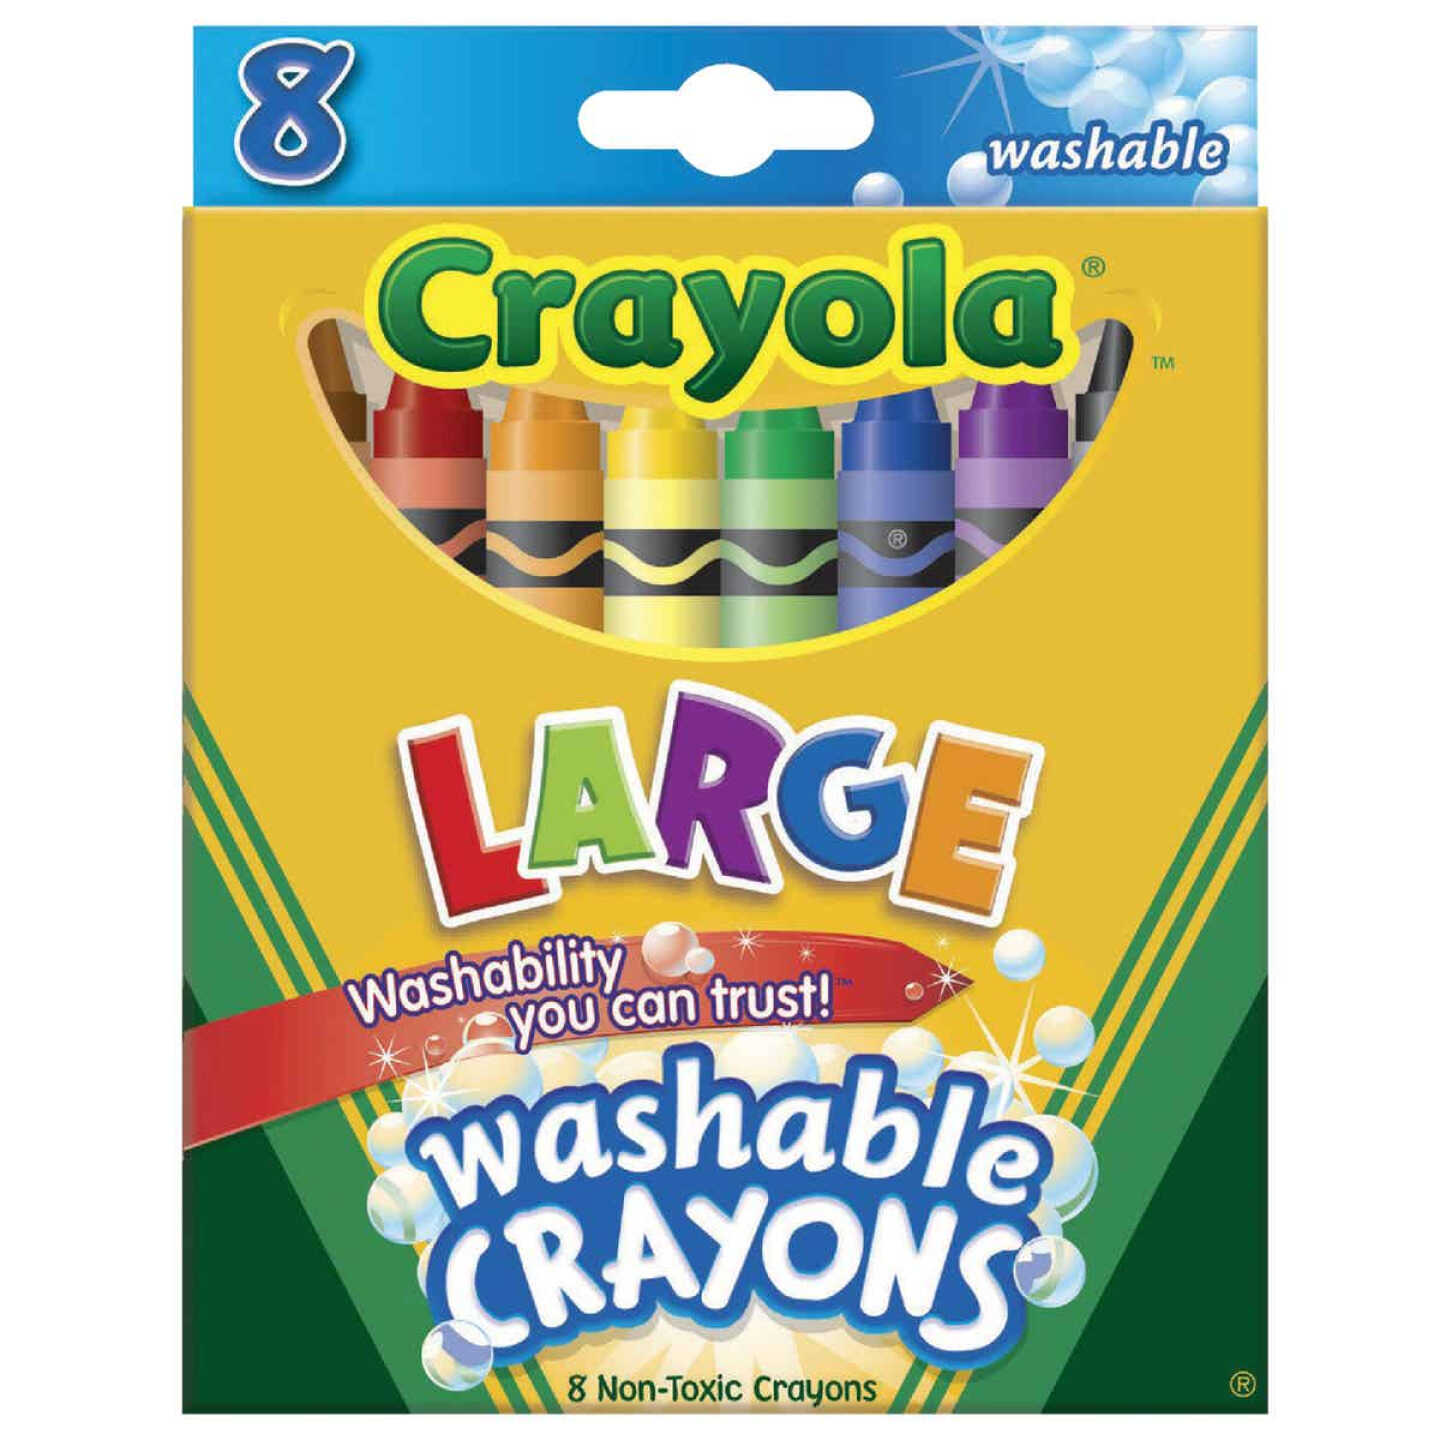 Crayola Jumbo Crayons 8 ct